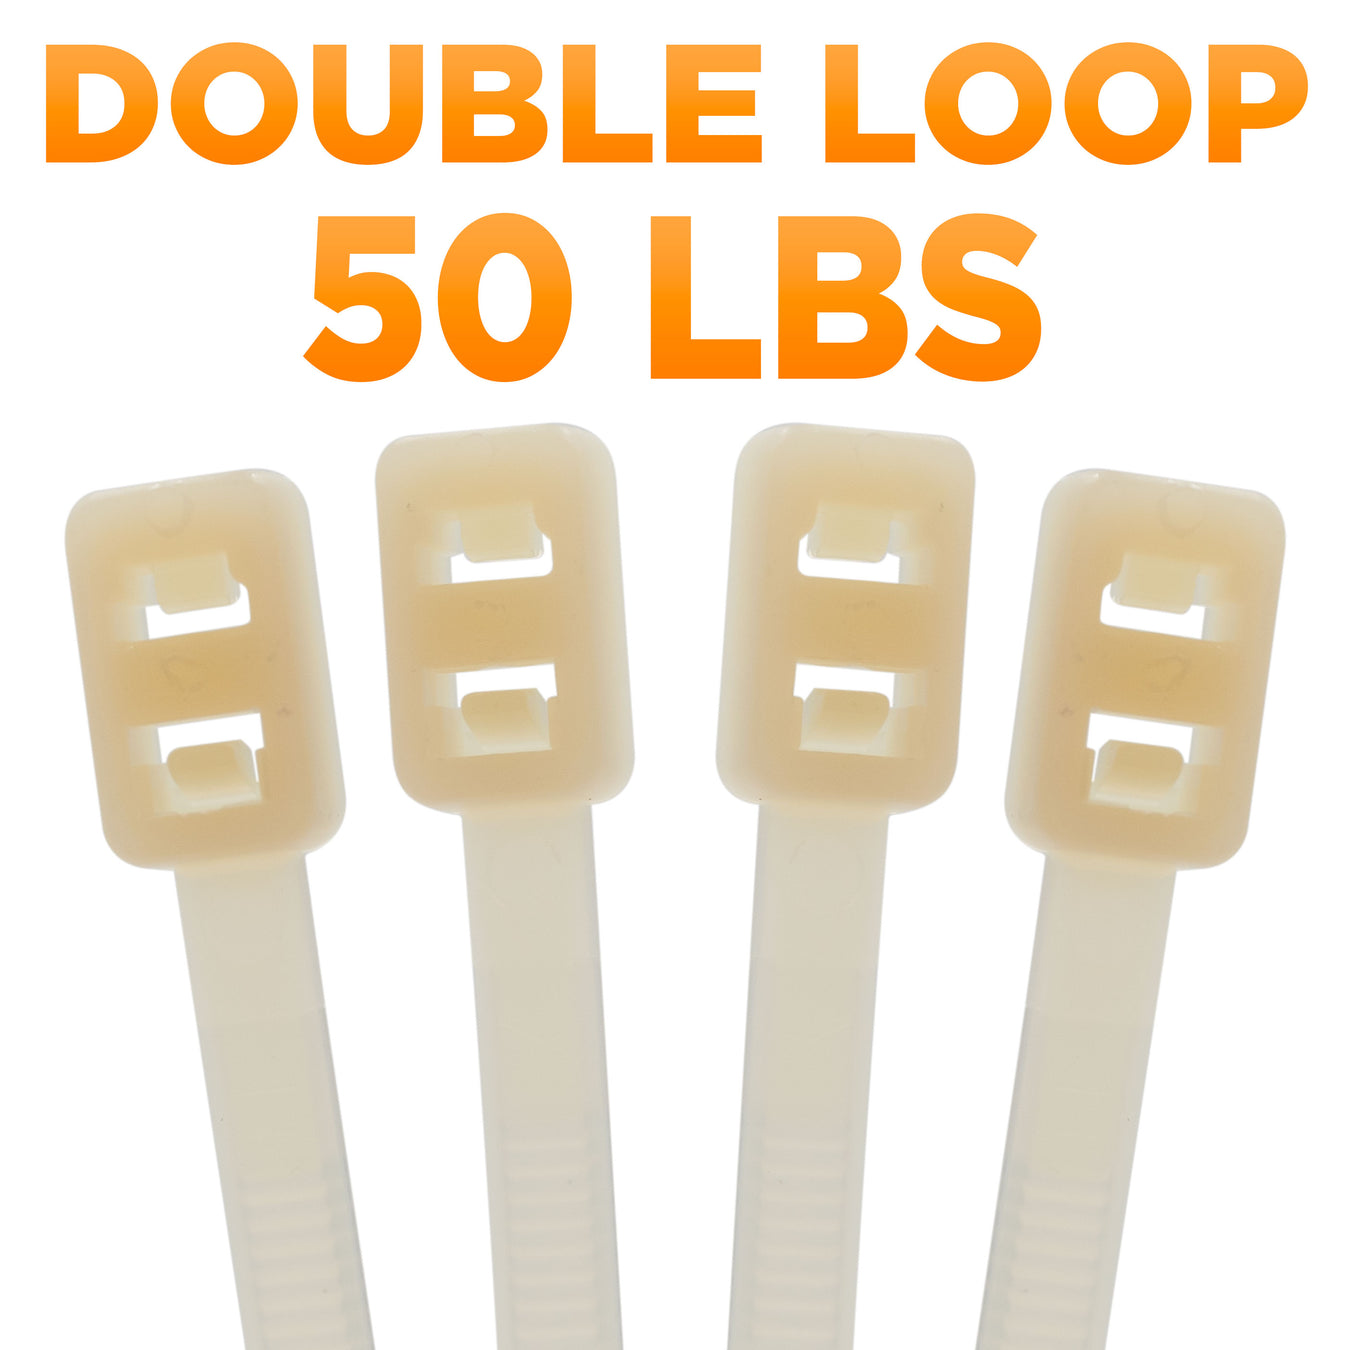 Double Loop Cable Ties